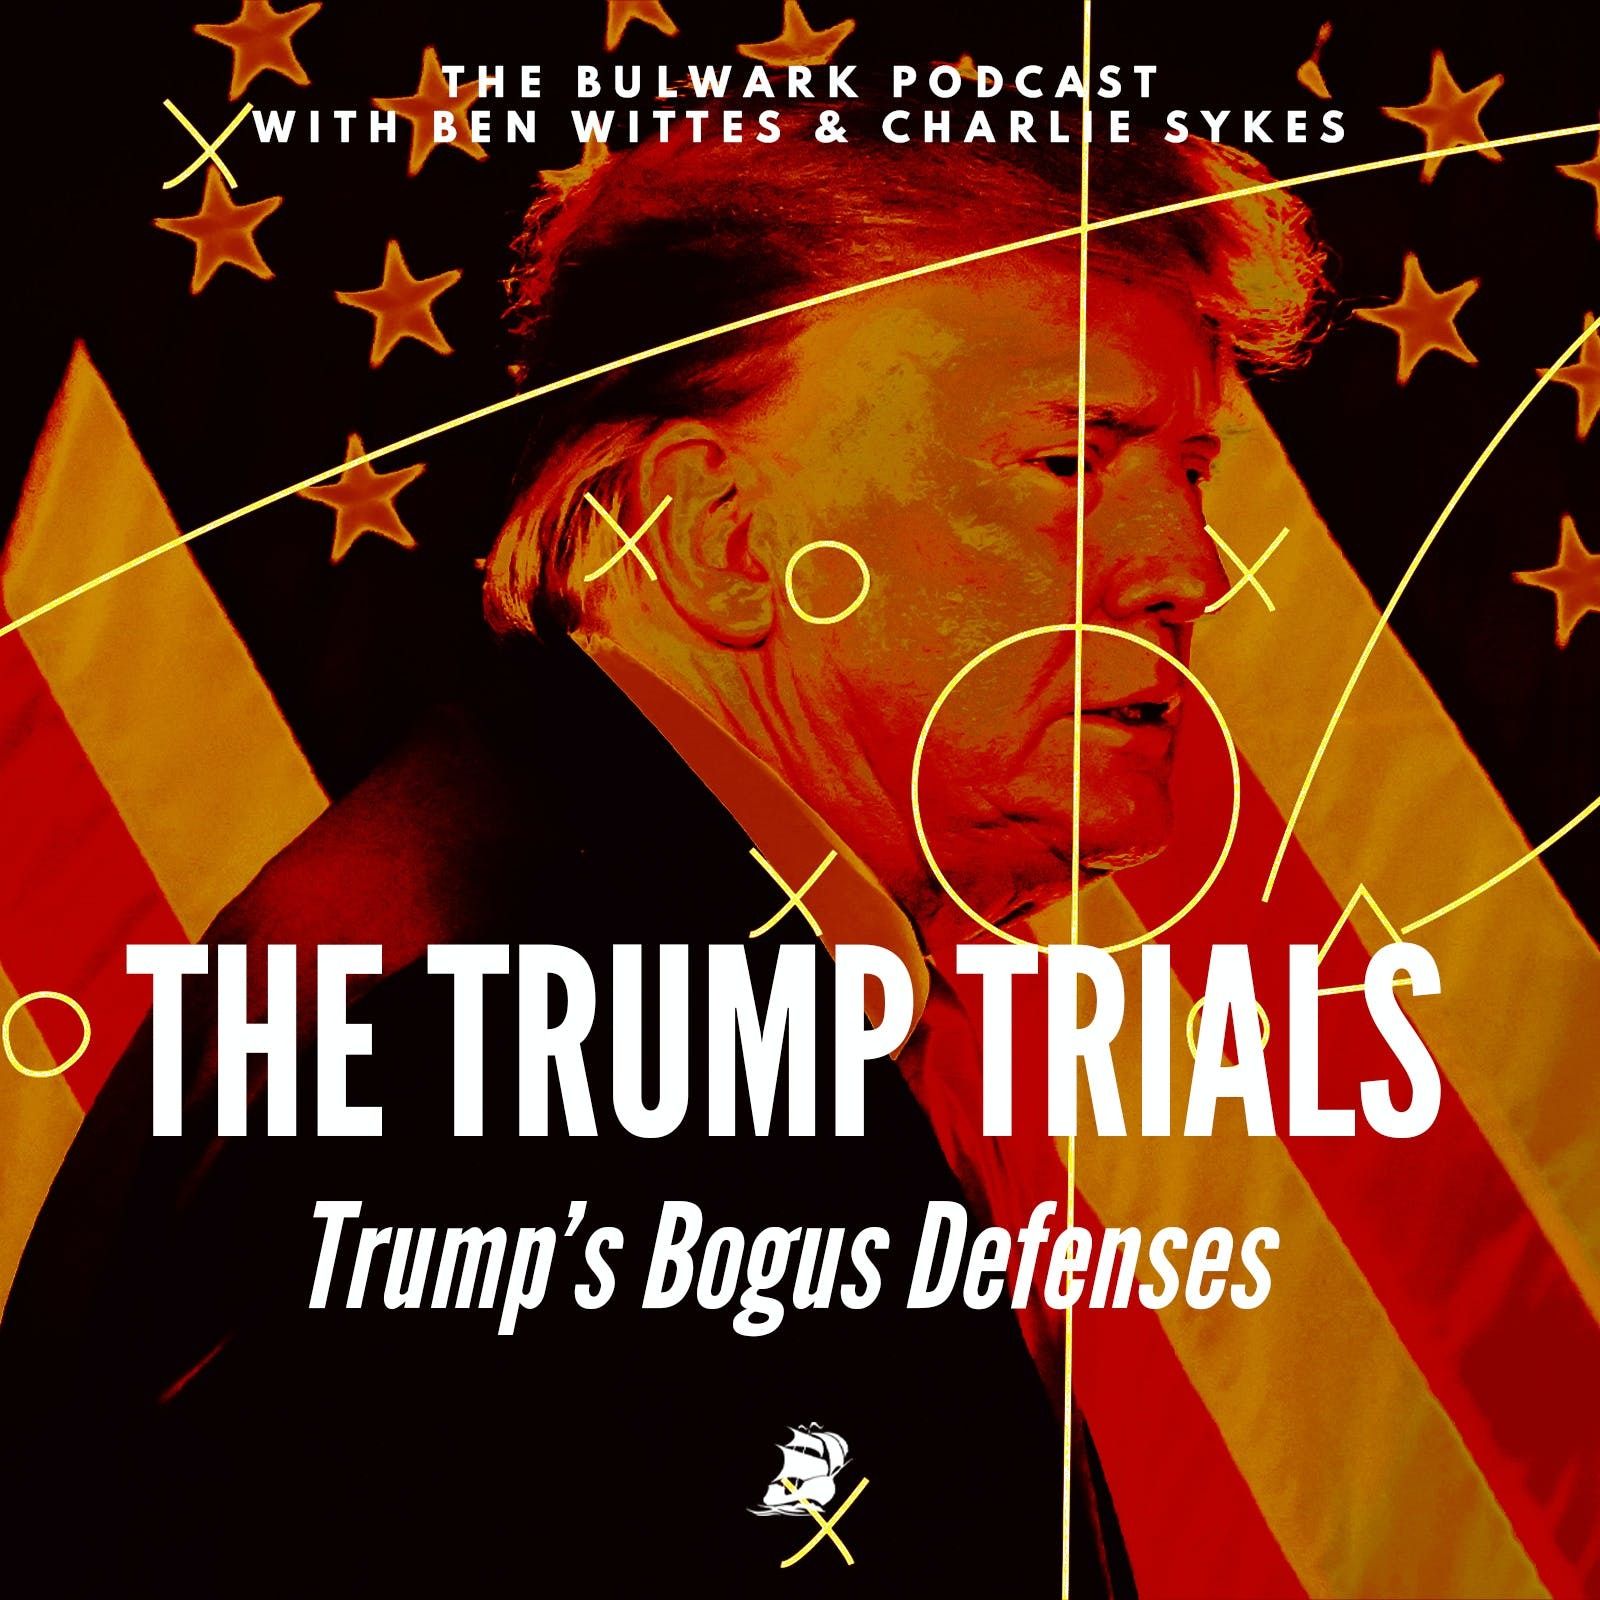 Trump’s Bogus Defenses by The Bulwark Podcast